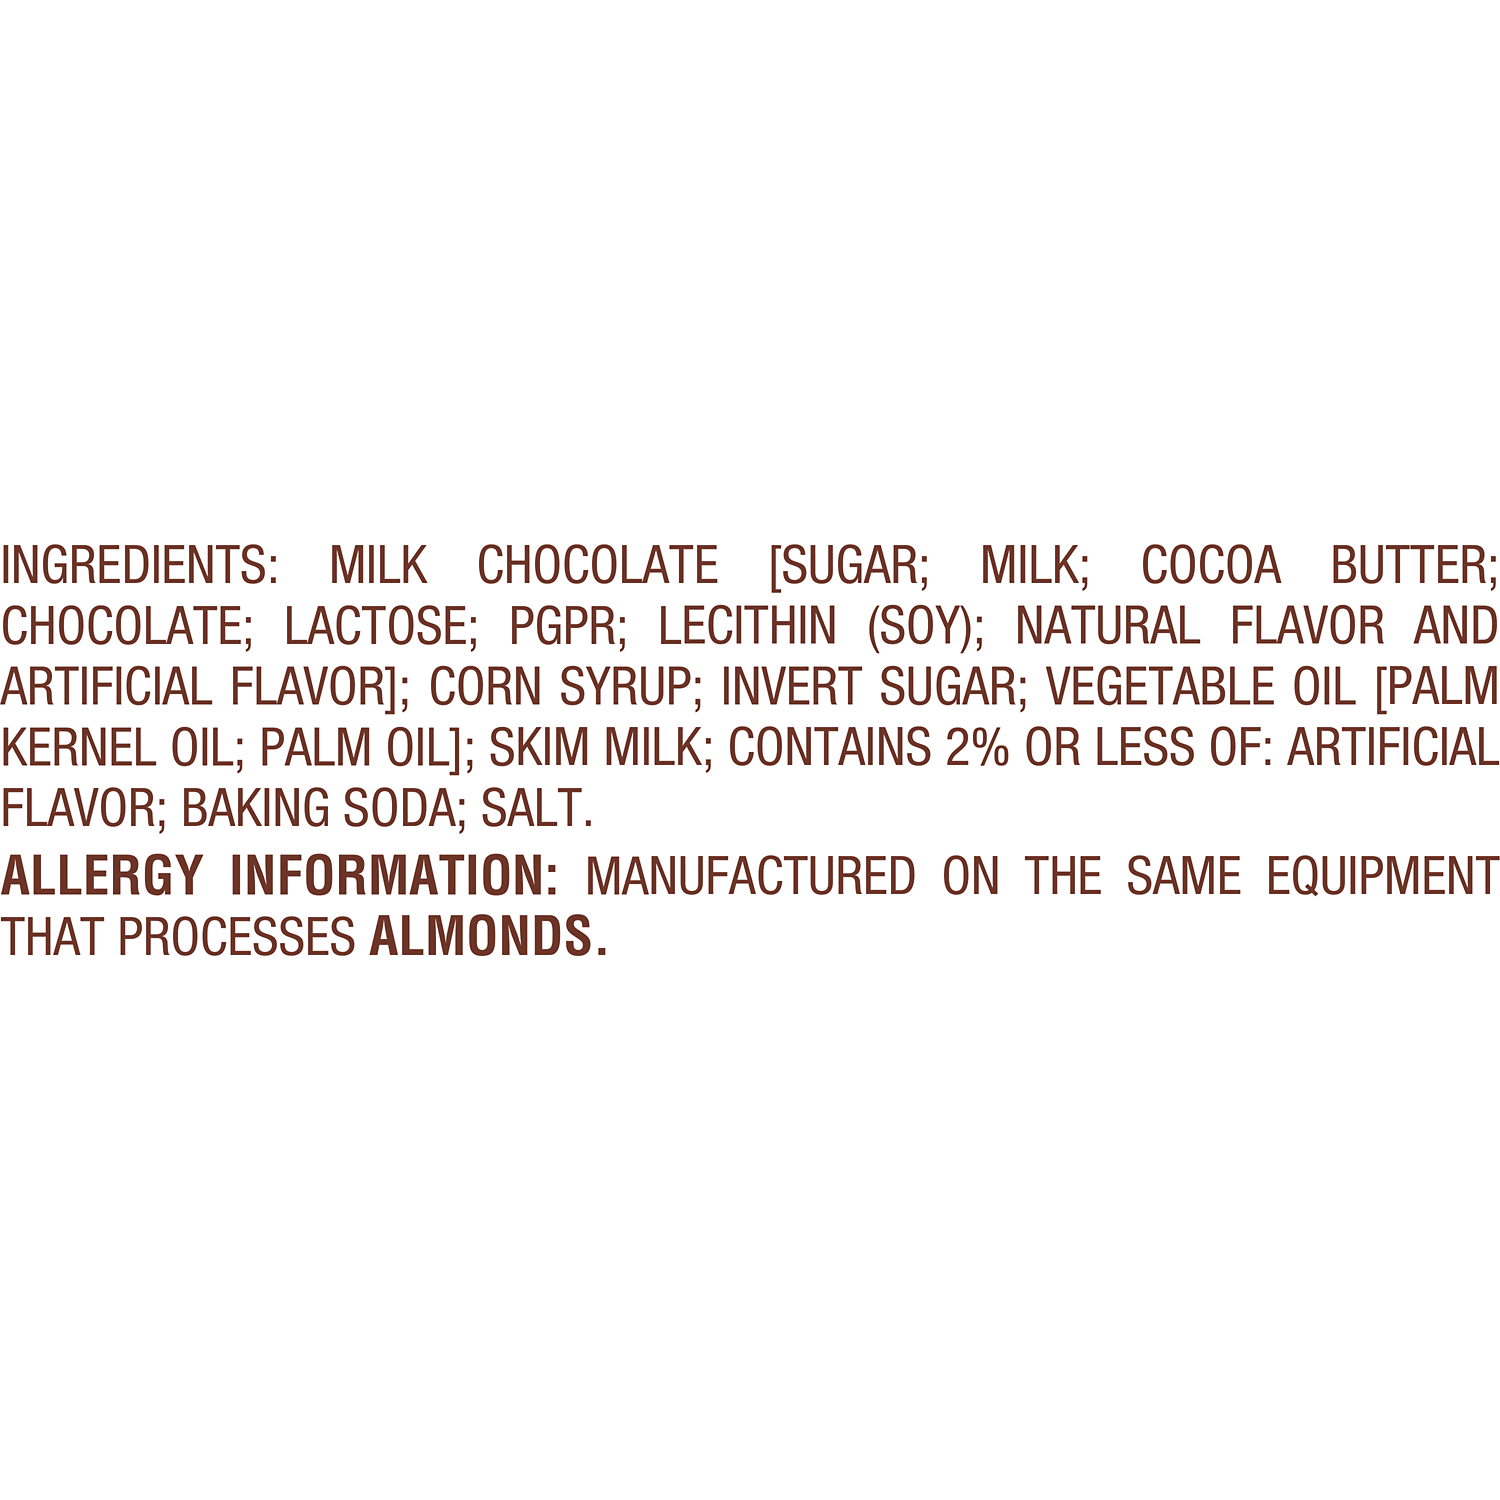 CADBURY CARAMELLO Caramel and Milk Chocolate Candy Bar, 1.6 oz - Ingredients